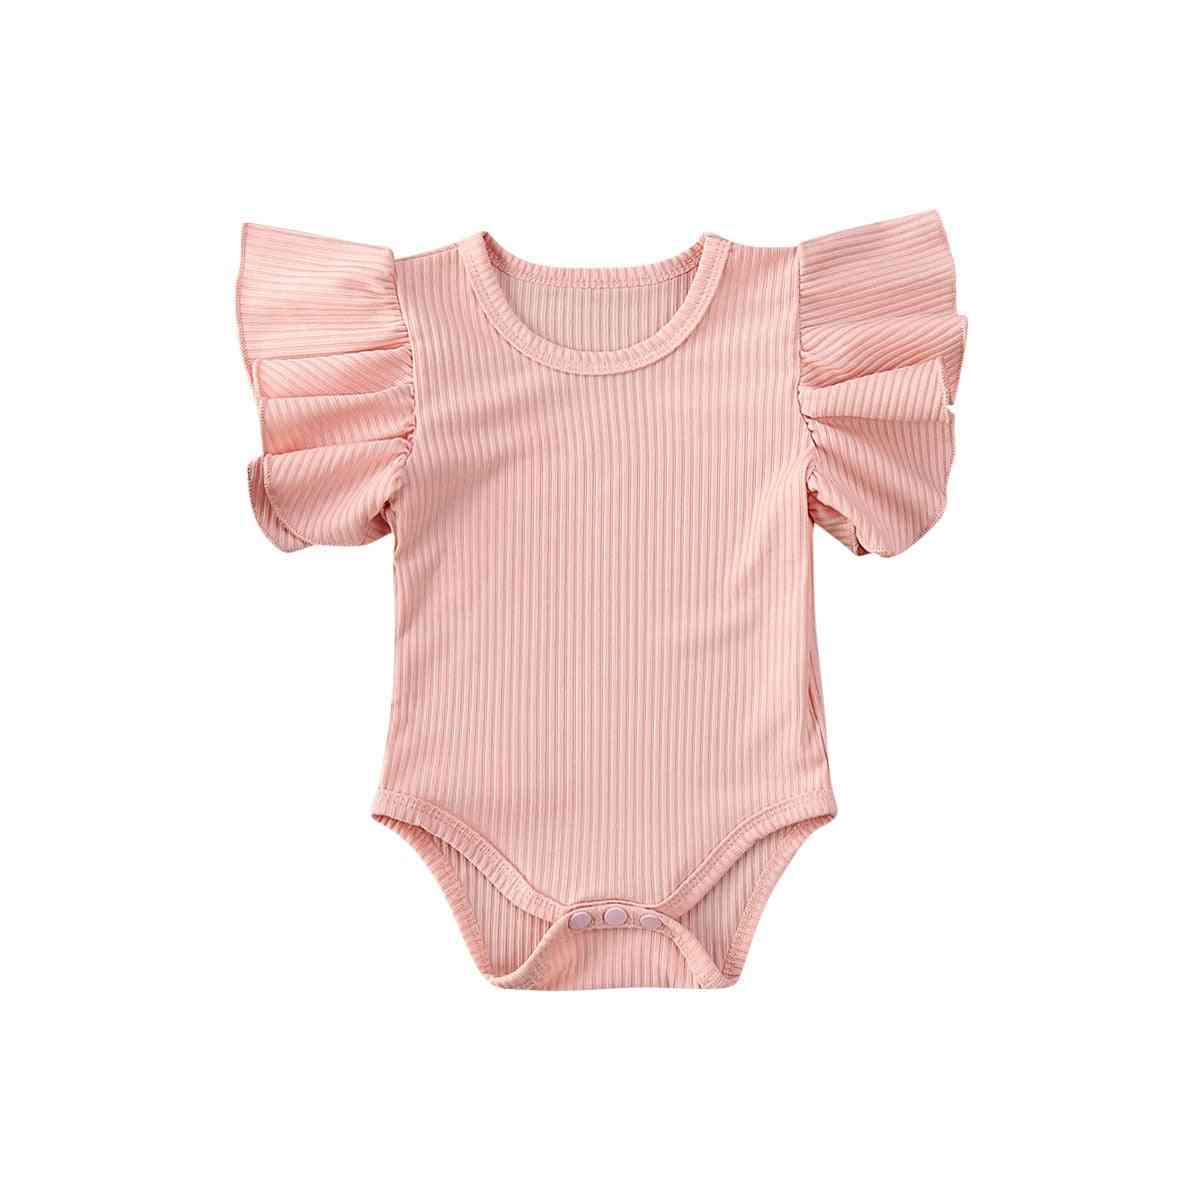 Newborn Baby Girl Cotton Jumpsuit / Bodysuit Short Sleeve Clothes Set